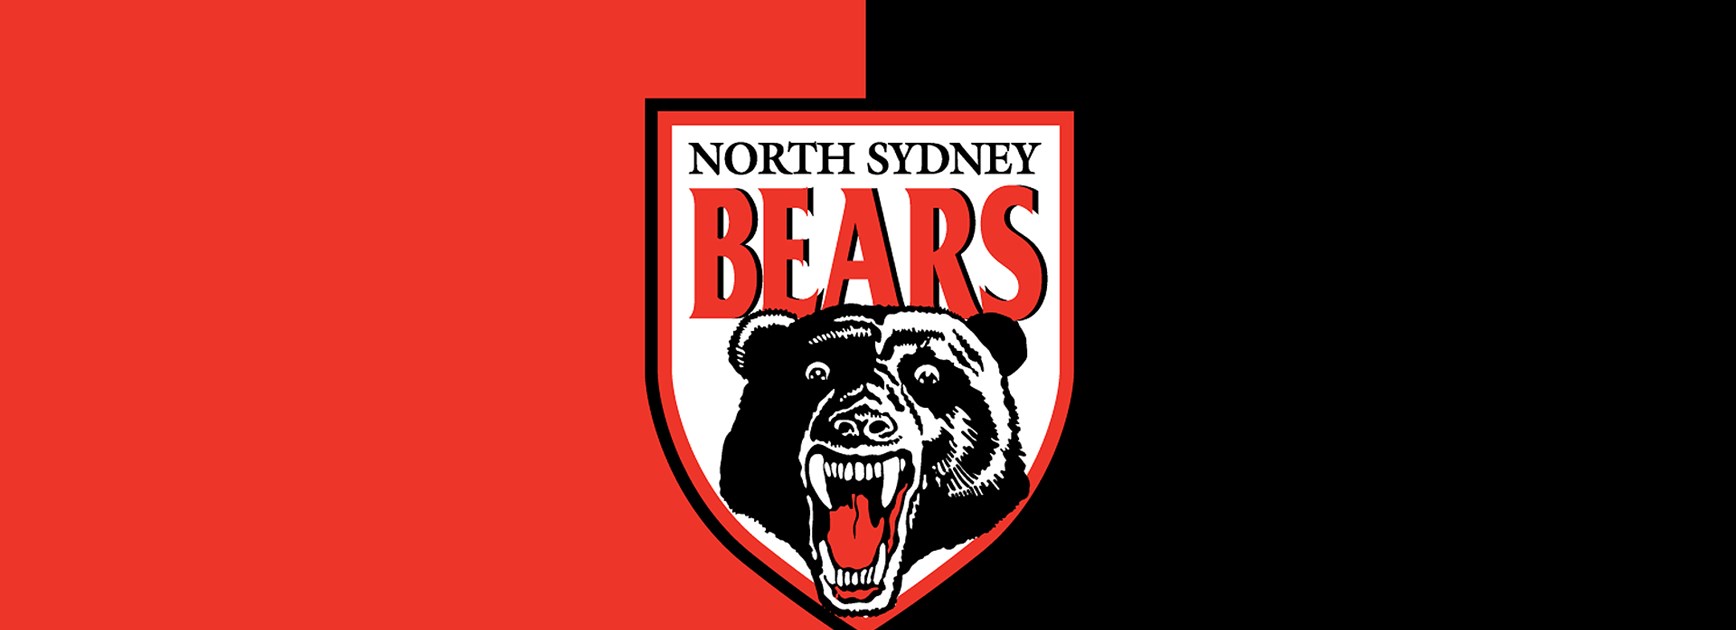 North Sydney Bears 2019 Draw